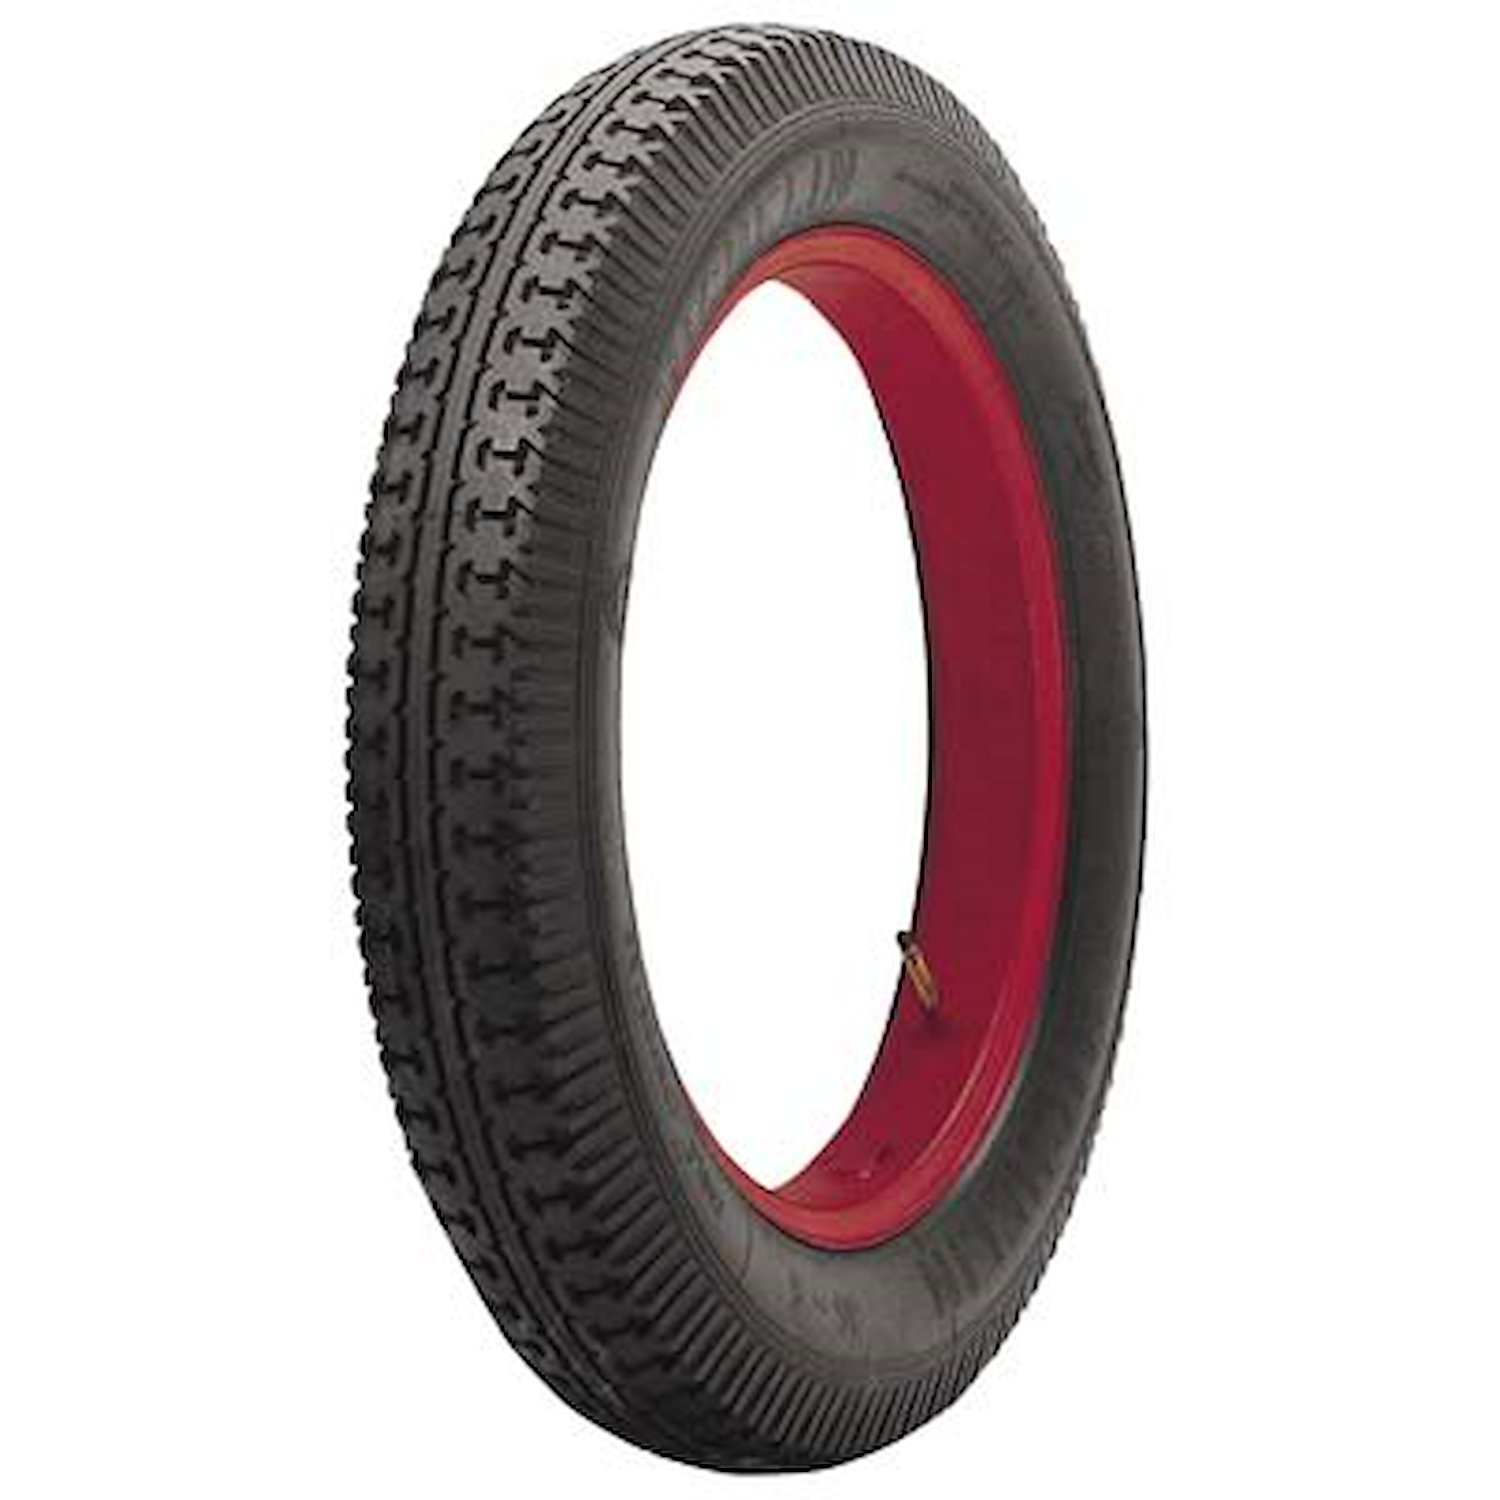 71375 Tire, Michelin Double Rivet, 550-18